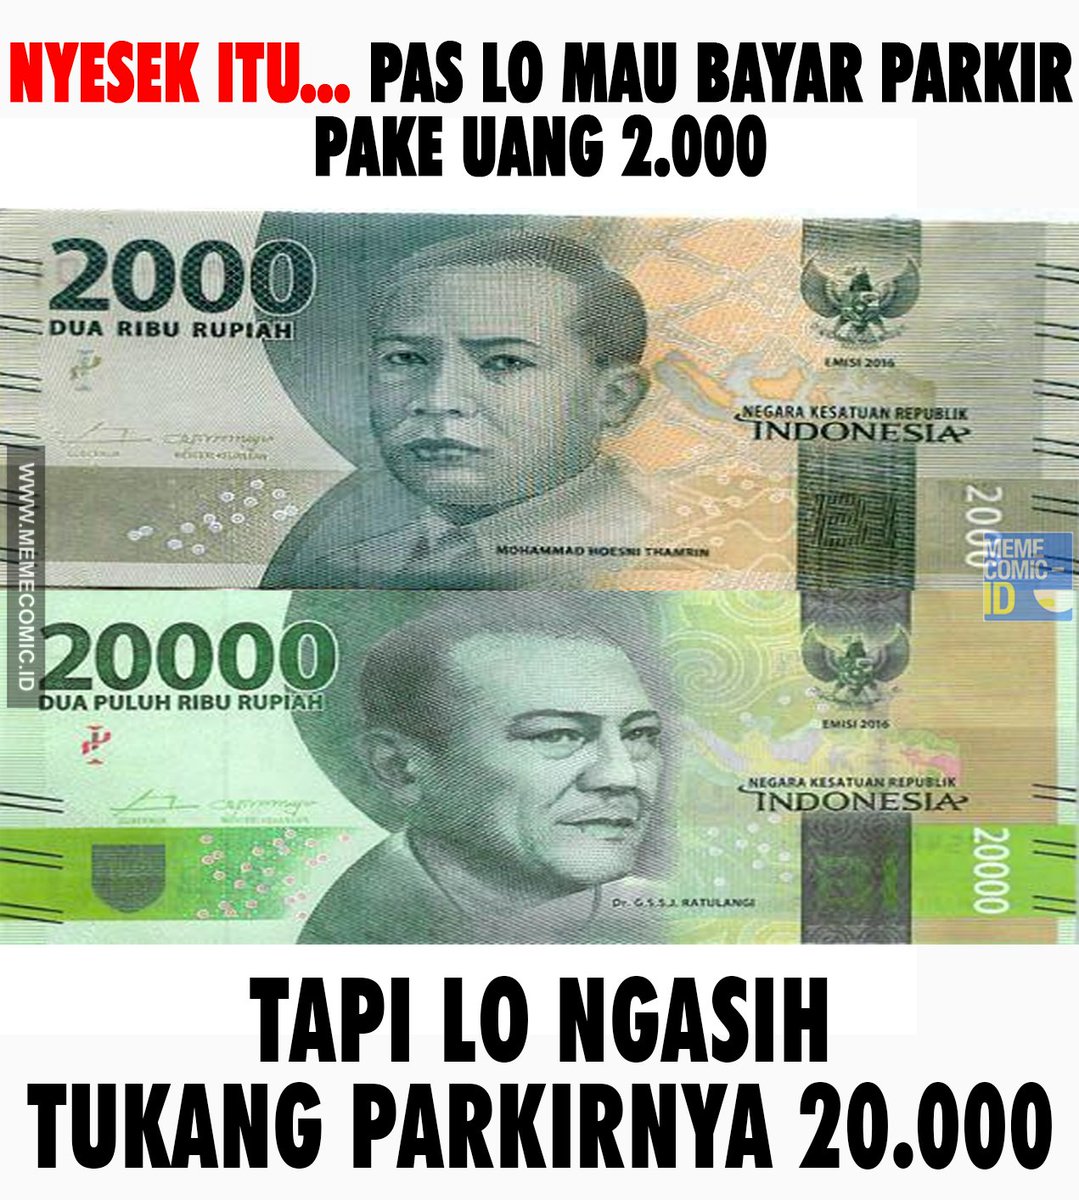 Meme Comic Indonesia On Twitter Kalian Sama Sama Gak Sadar Kalo